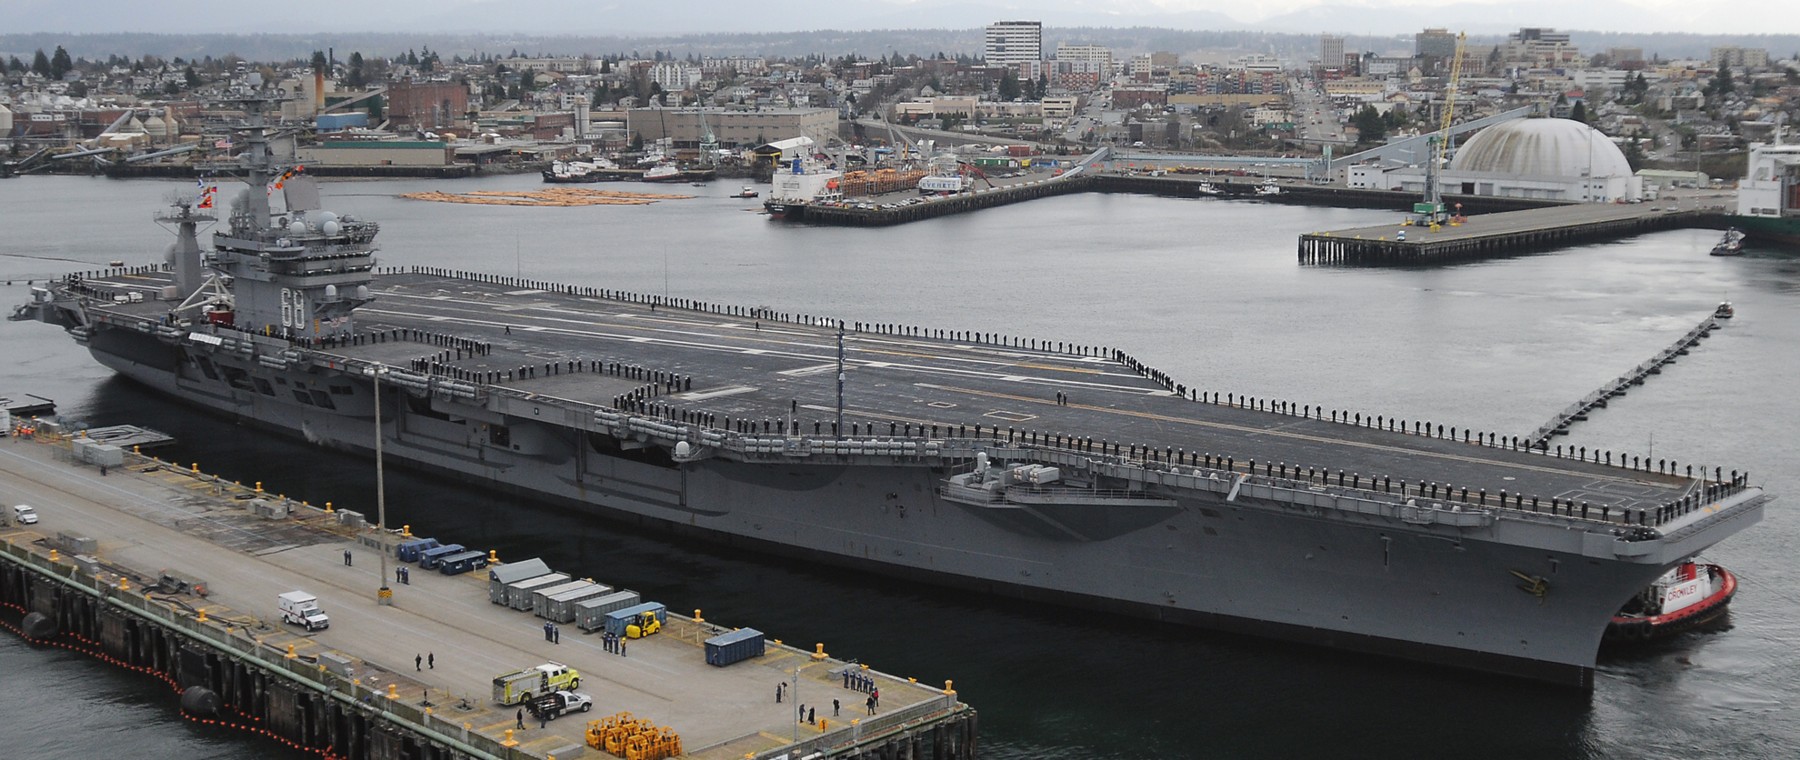 cvn-68 uss nimitz aircraft carrier us navy naval station everett 184